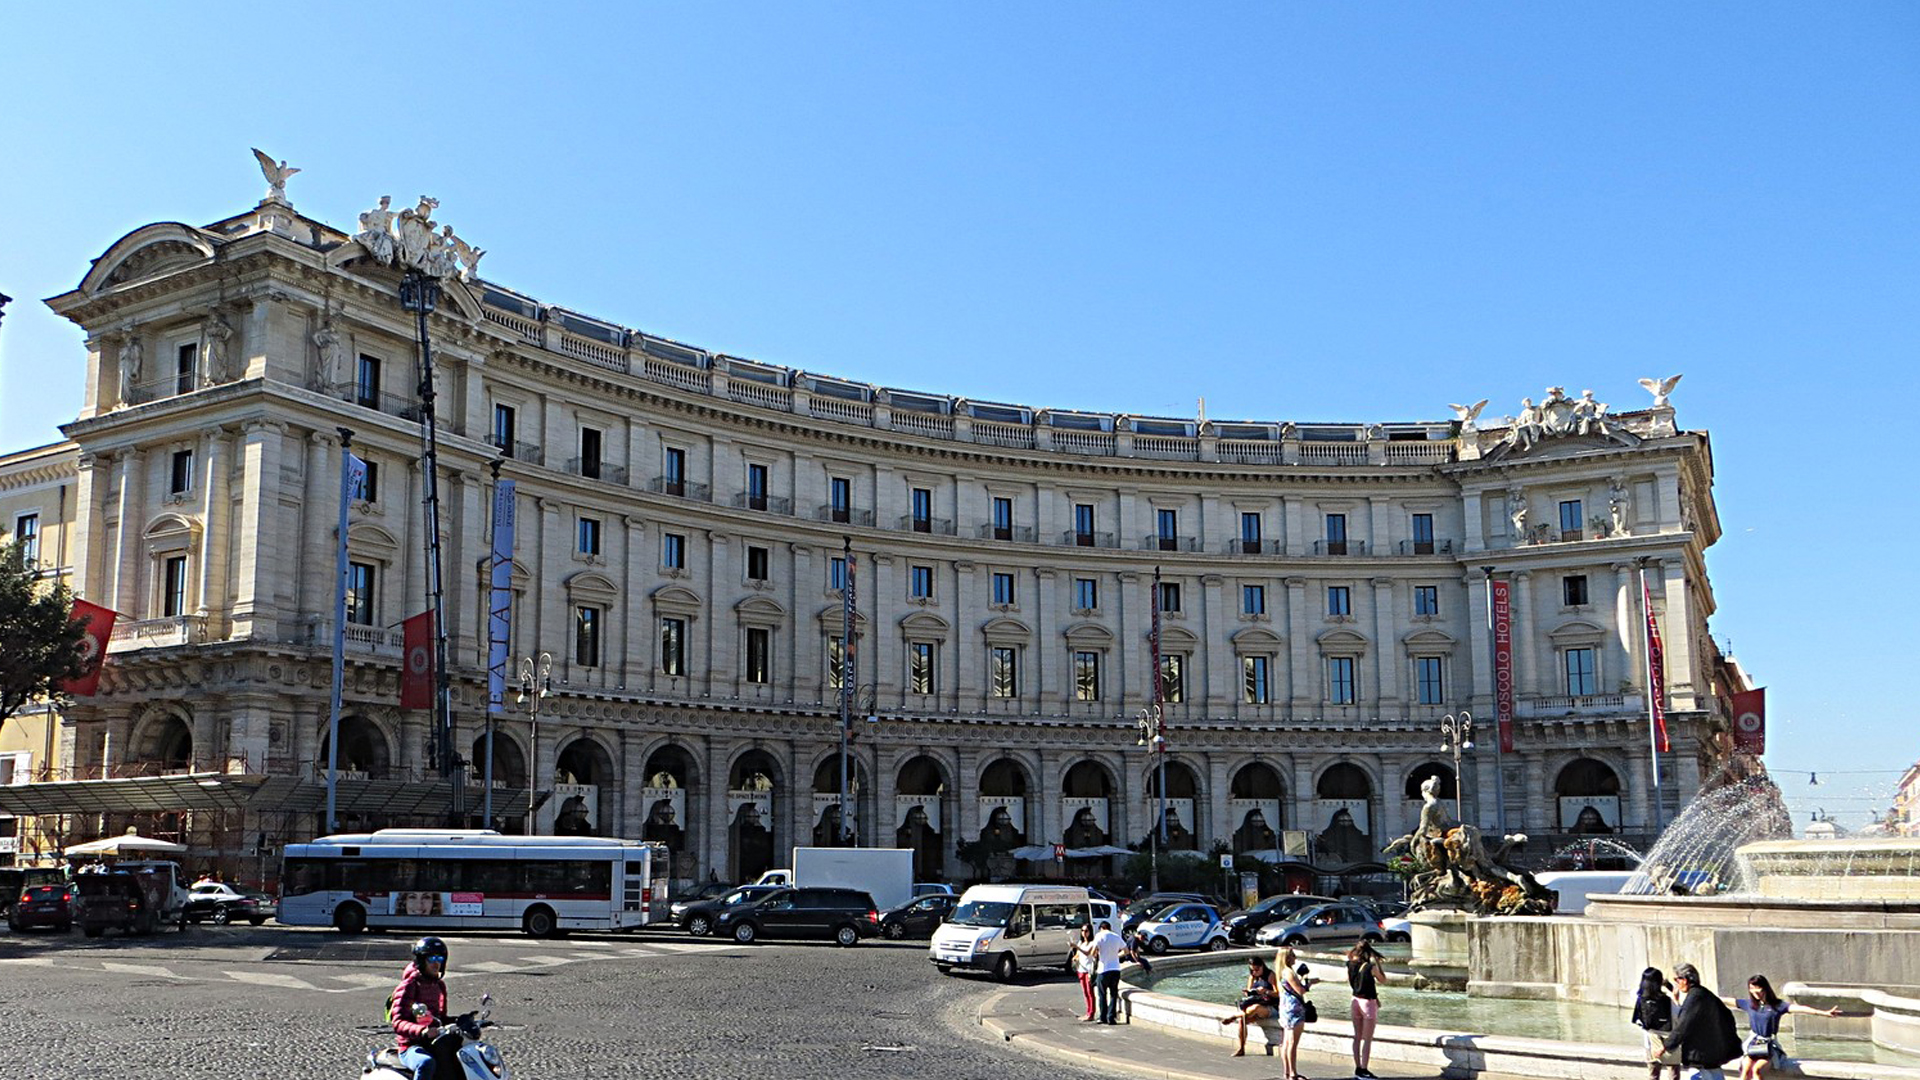 Площадь Республики (Piazza della Repubblica)